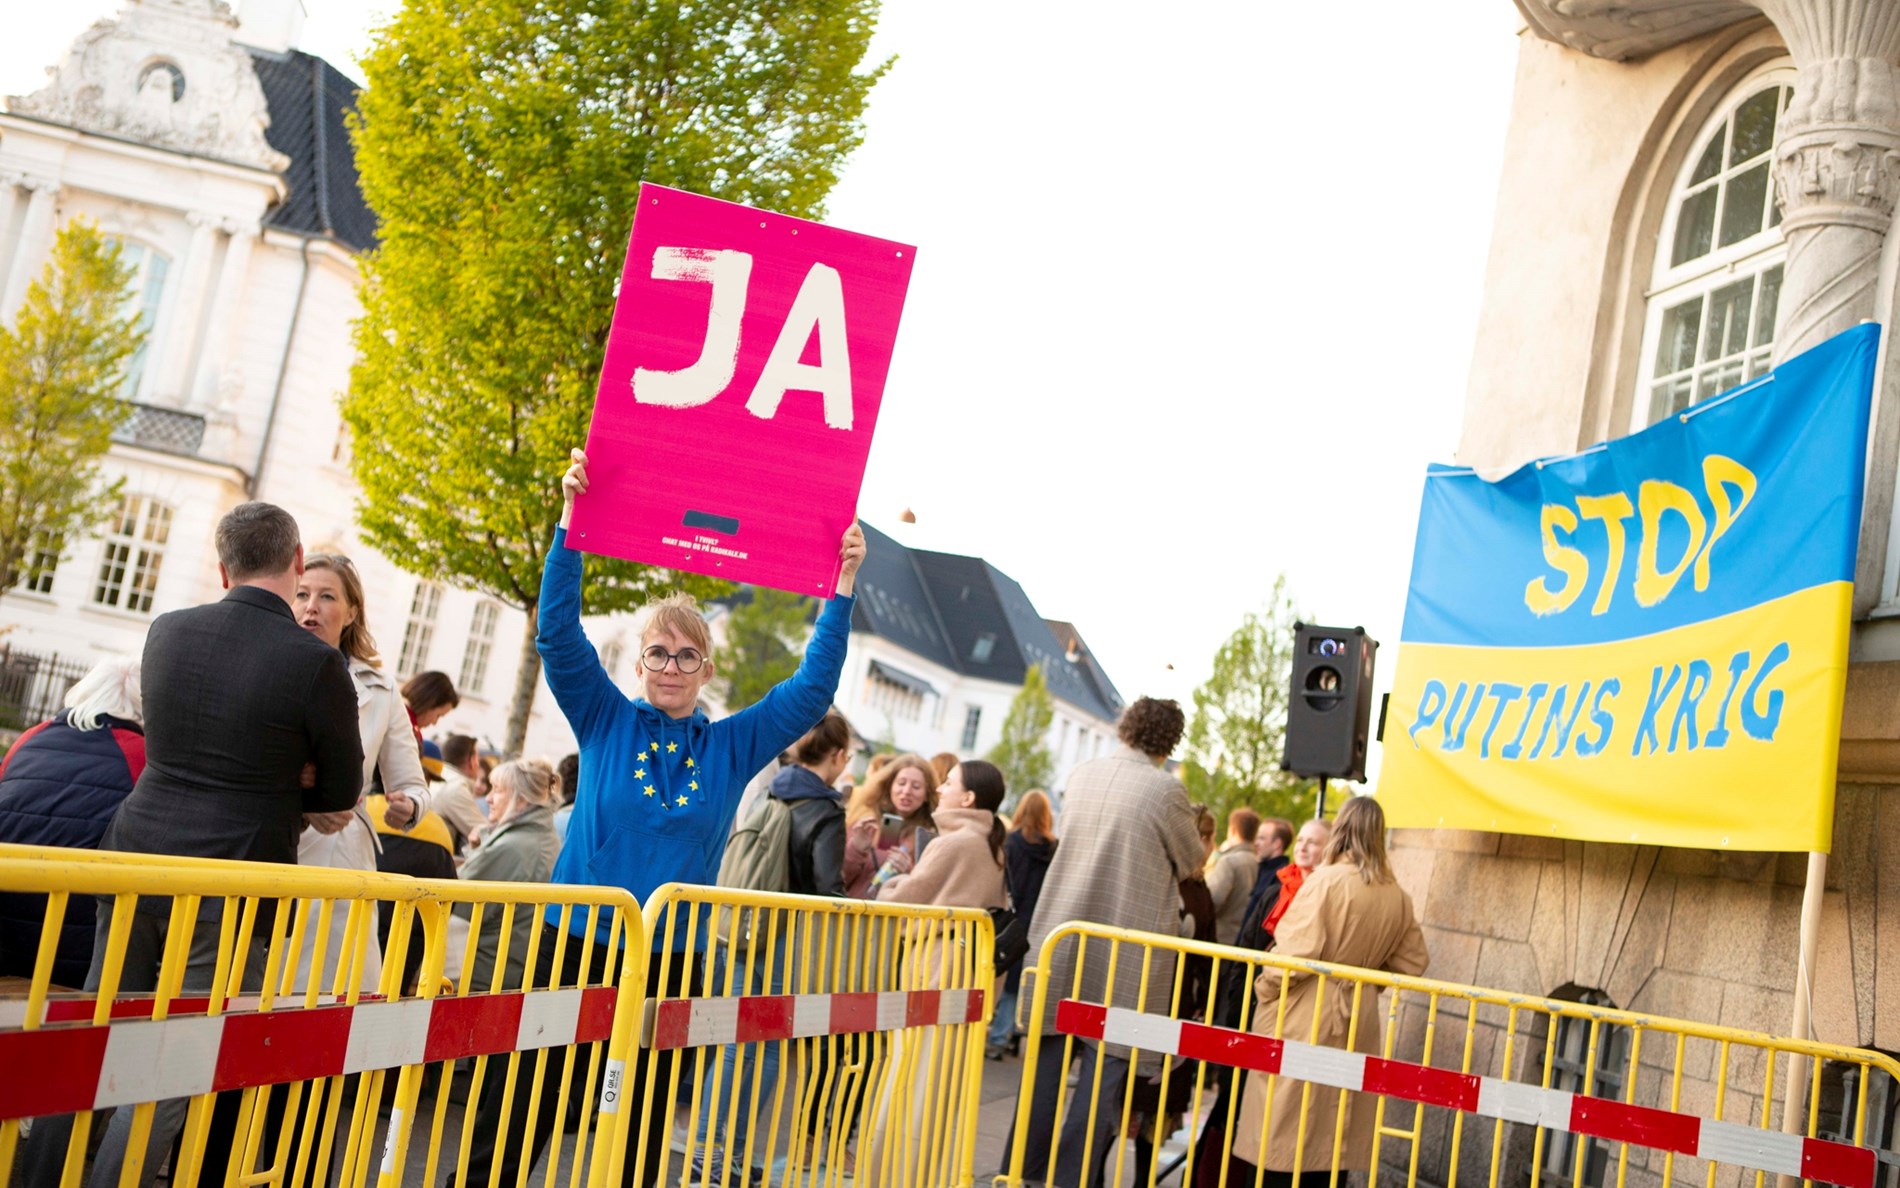 Kathrine Olldag med JA-plakat ved radikalt arrangement foran Ruslands ambassade